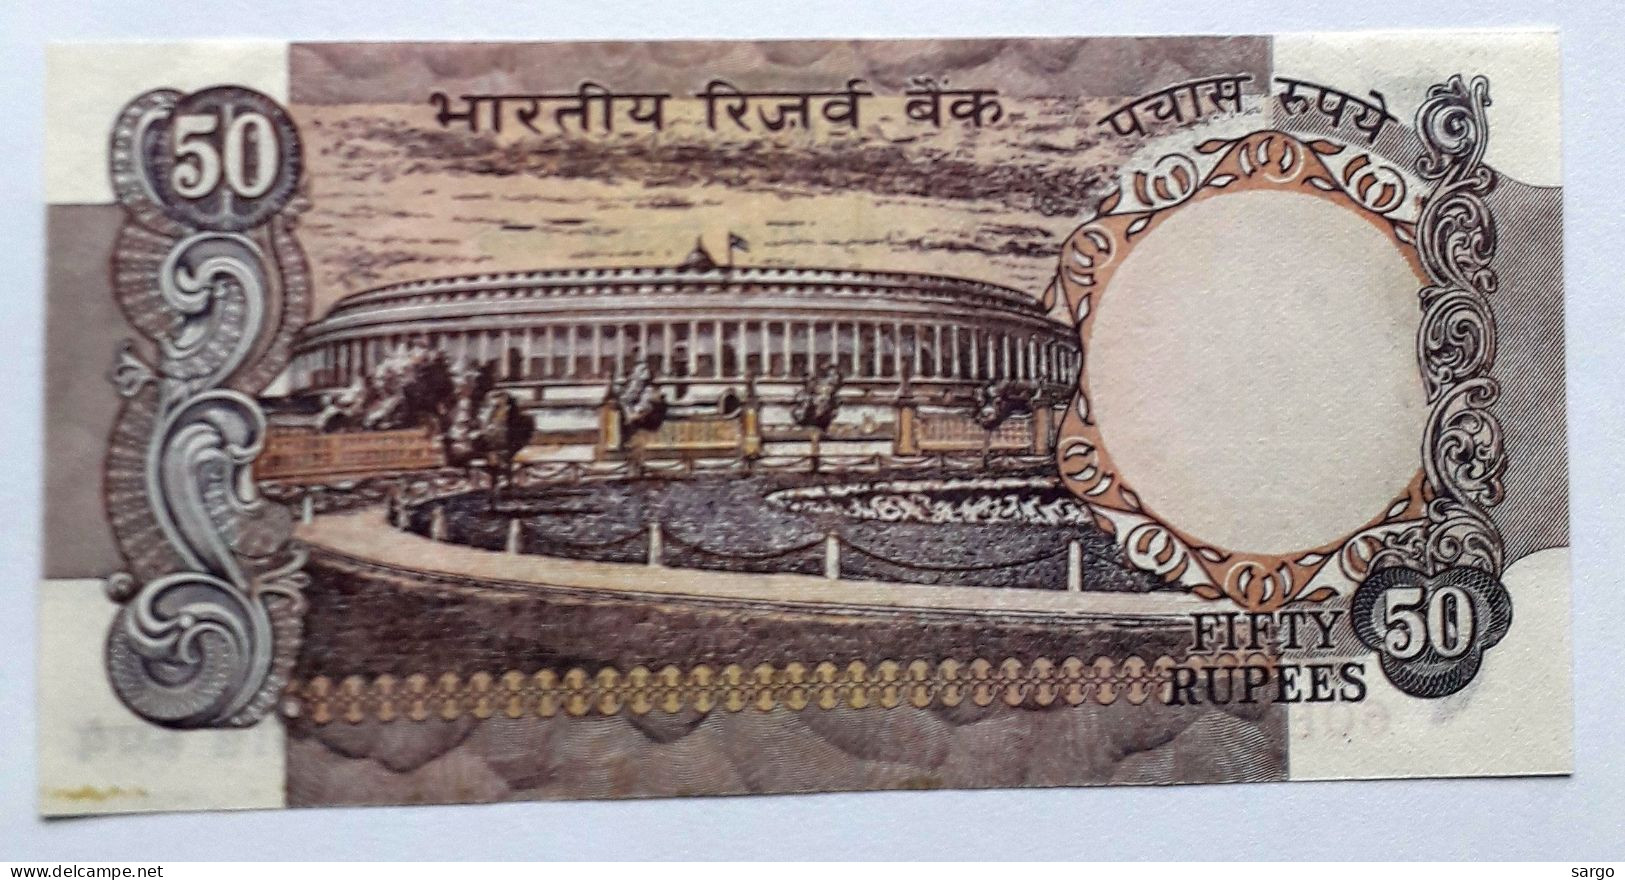 INDIA - 50 RUPEES - P 84 K (1978-1997) - UNC - BANKNOTES - PAPER MONEY - CARTAMONETA - - India